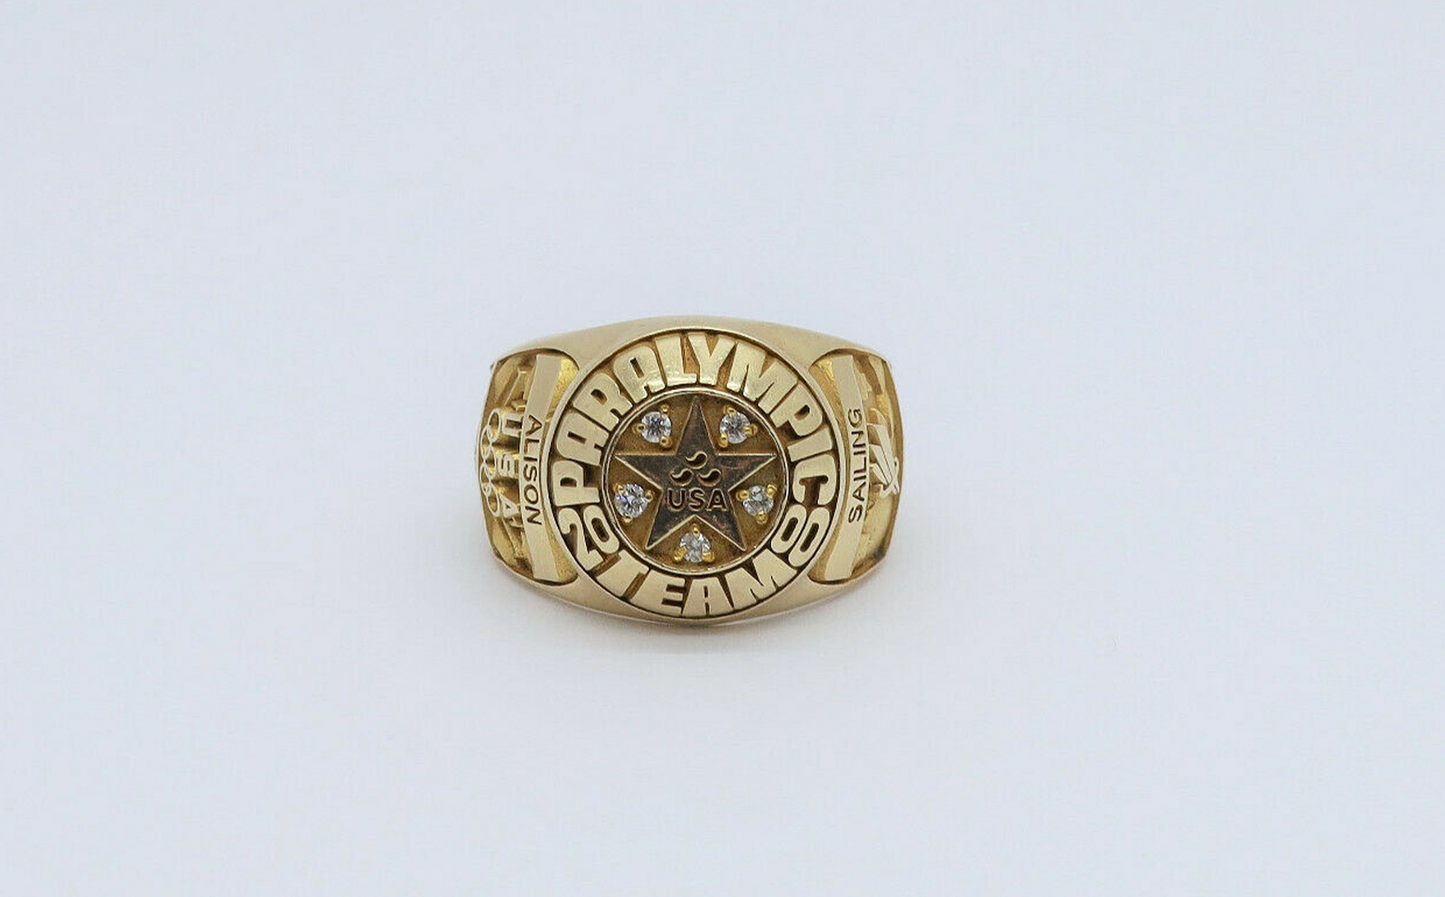 14k Yellow Gold & Diamonds 2000 Paralympic USA Sailing Ring, Size 9.75 - 16.7g